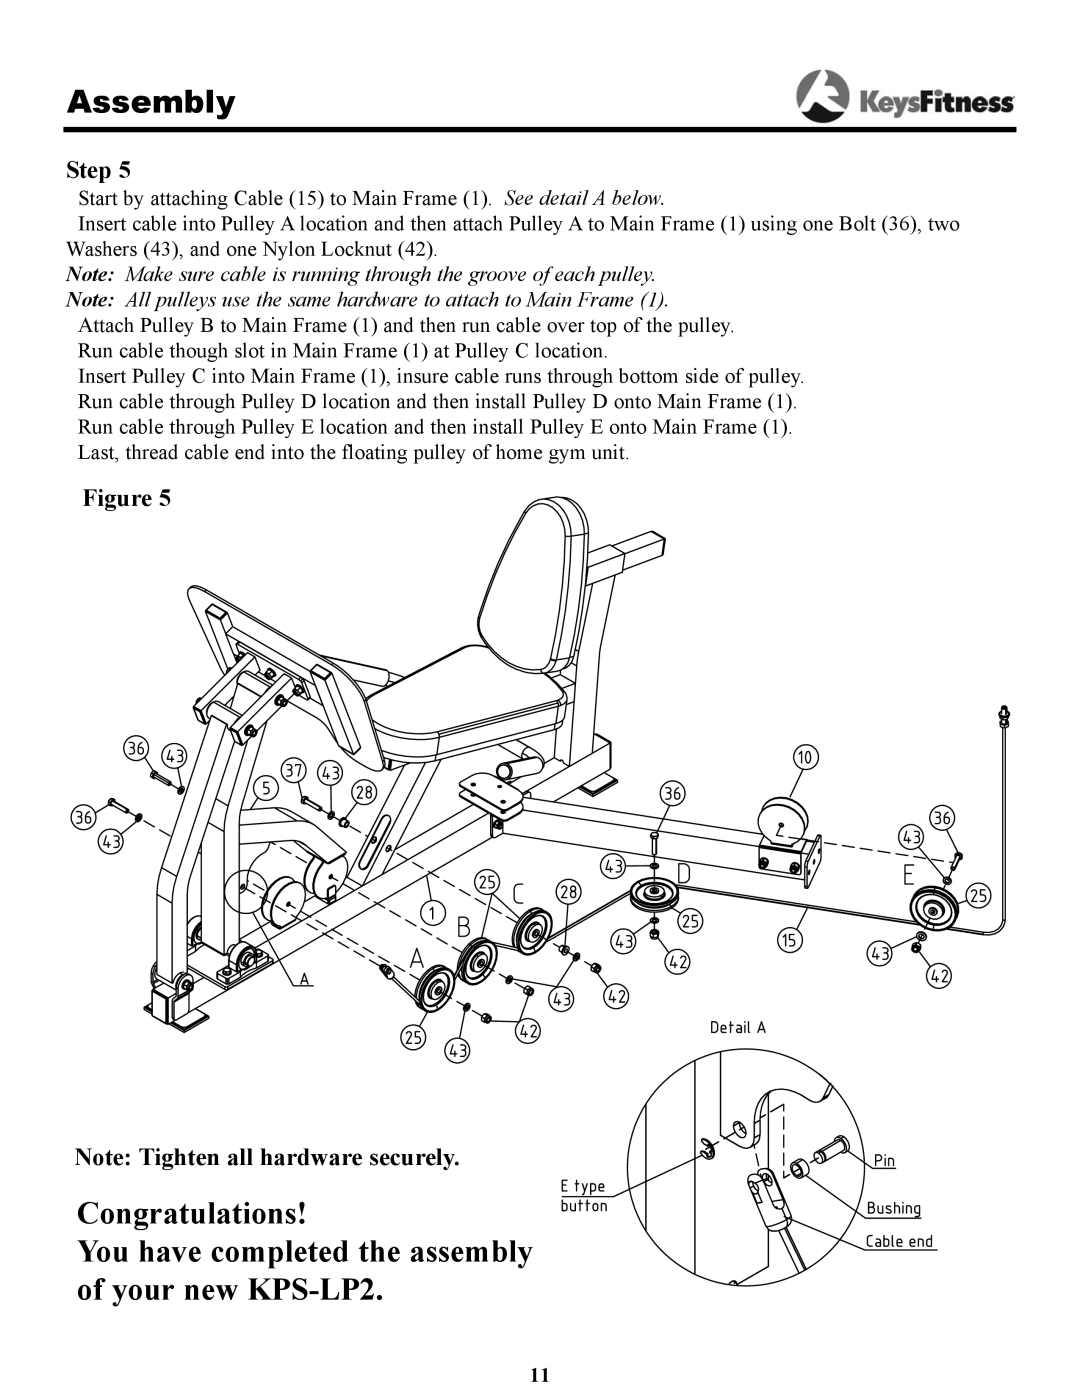 Keys Fitness KPS-LP2 owner manual Assembly 